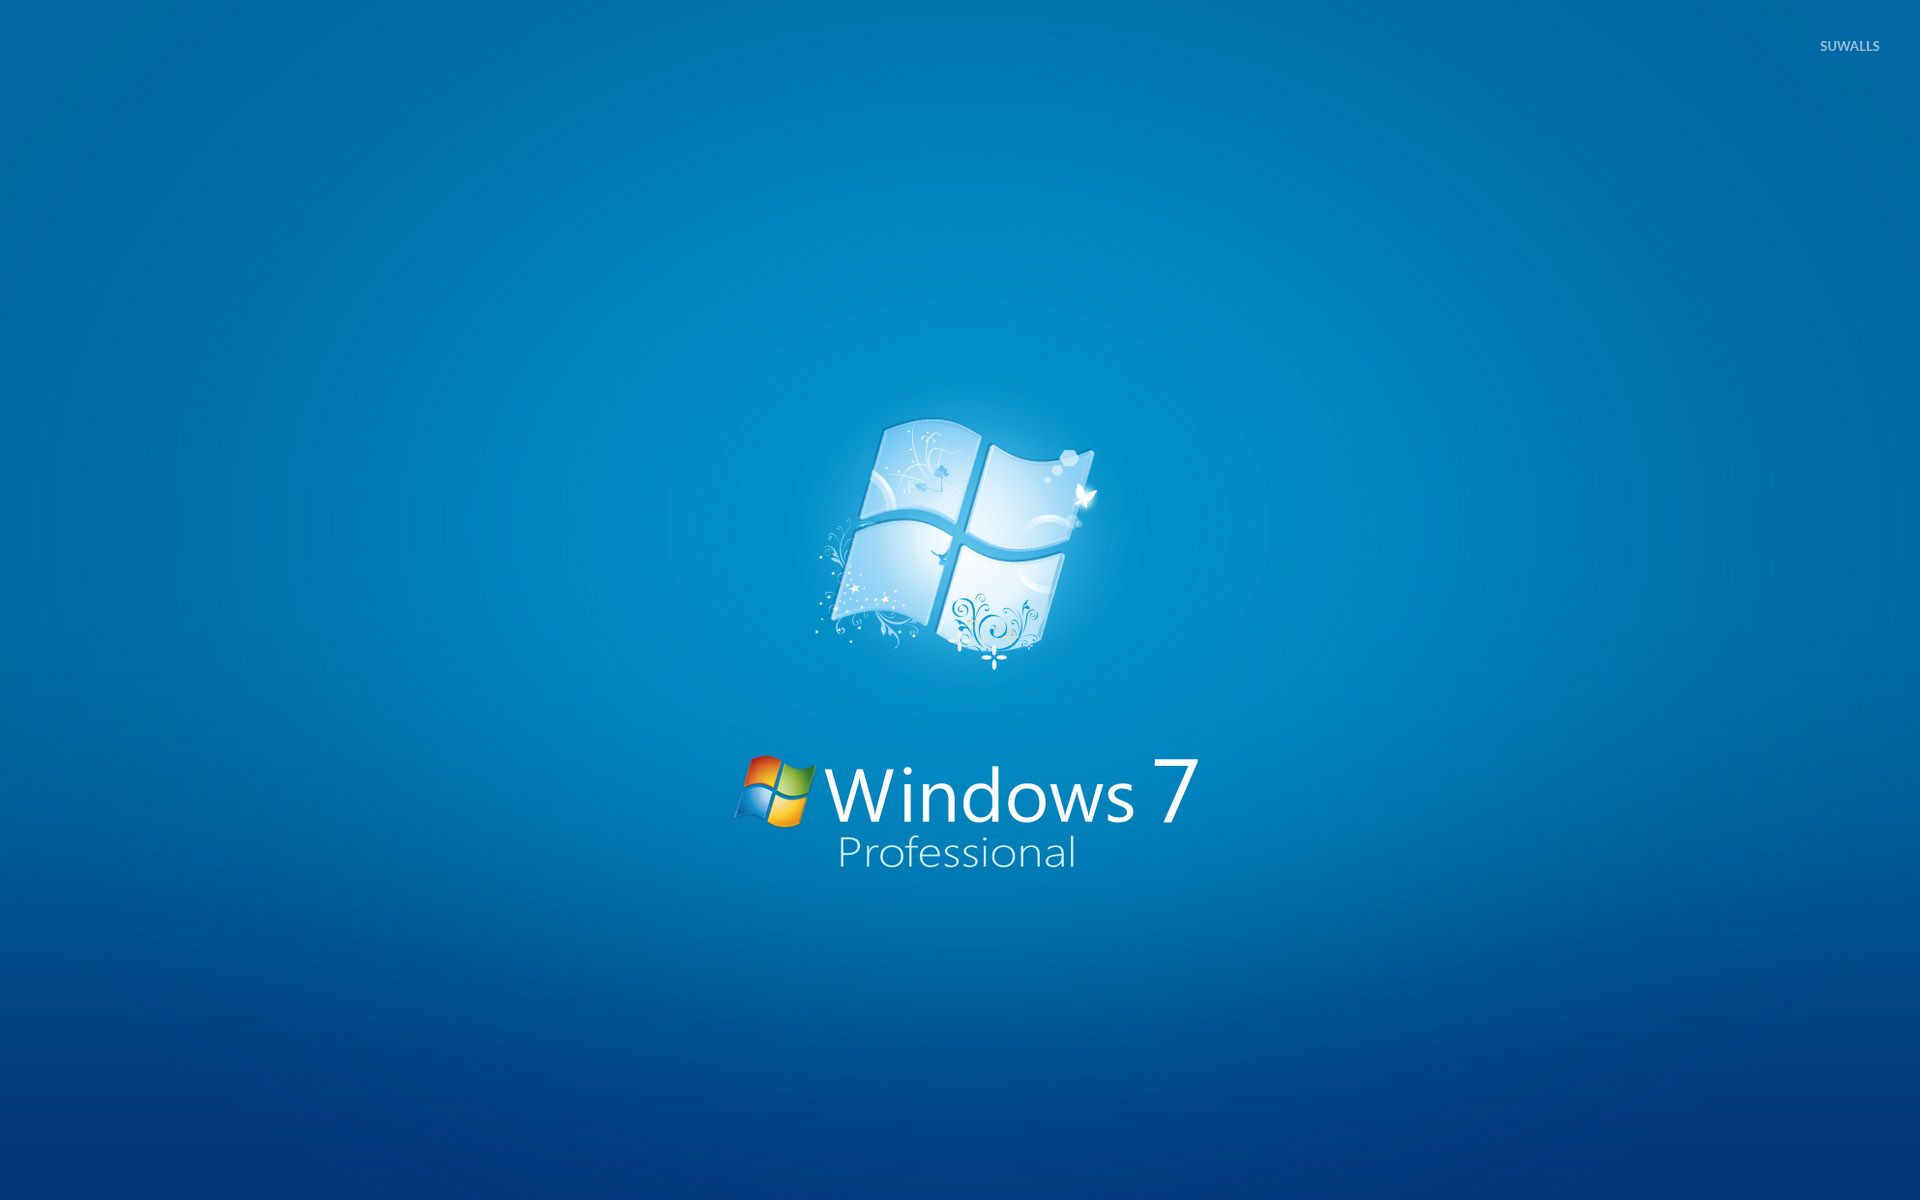 Windows 7 Professional wallpaper wallpaper